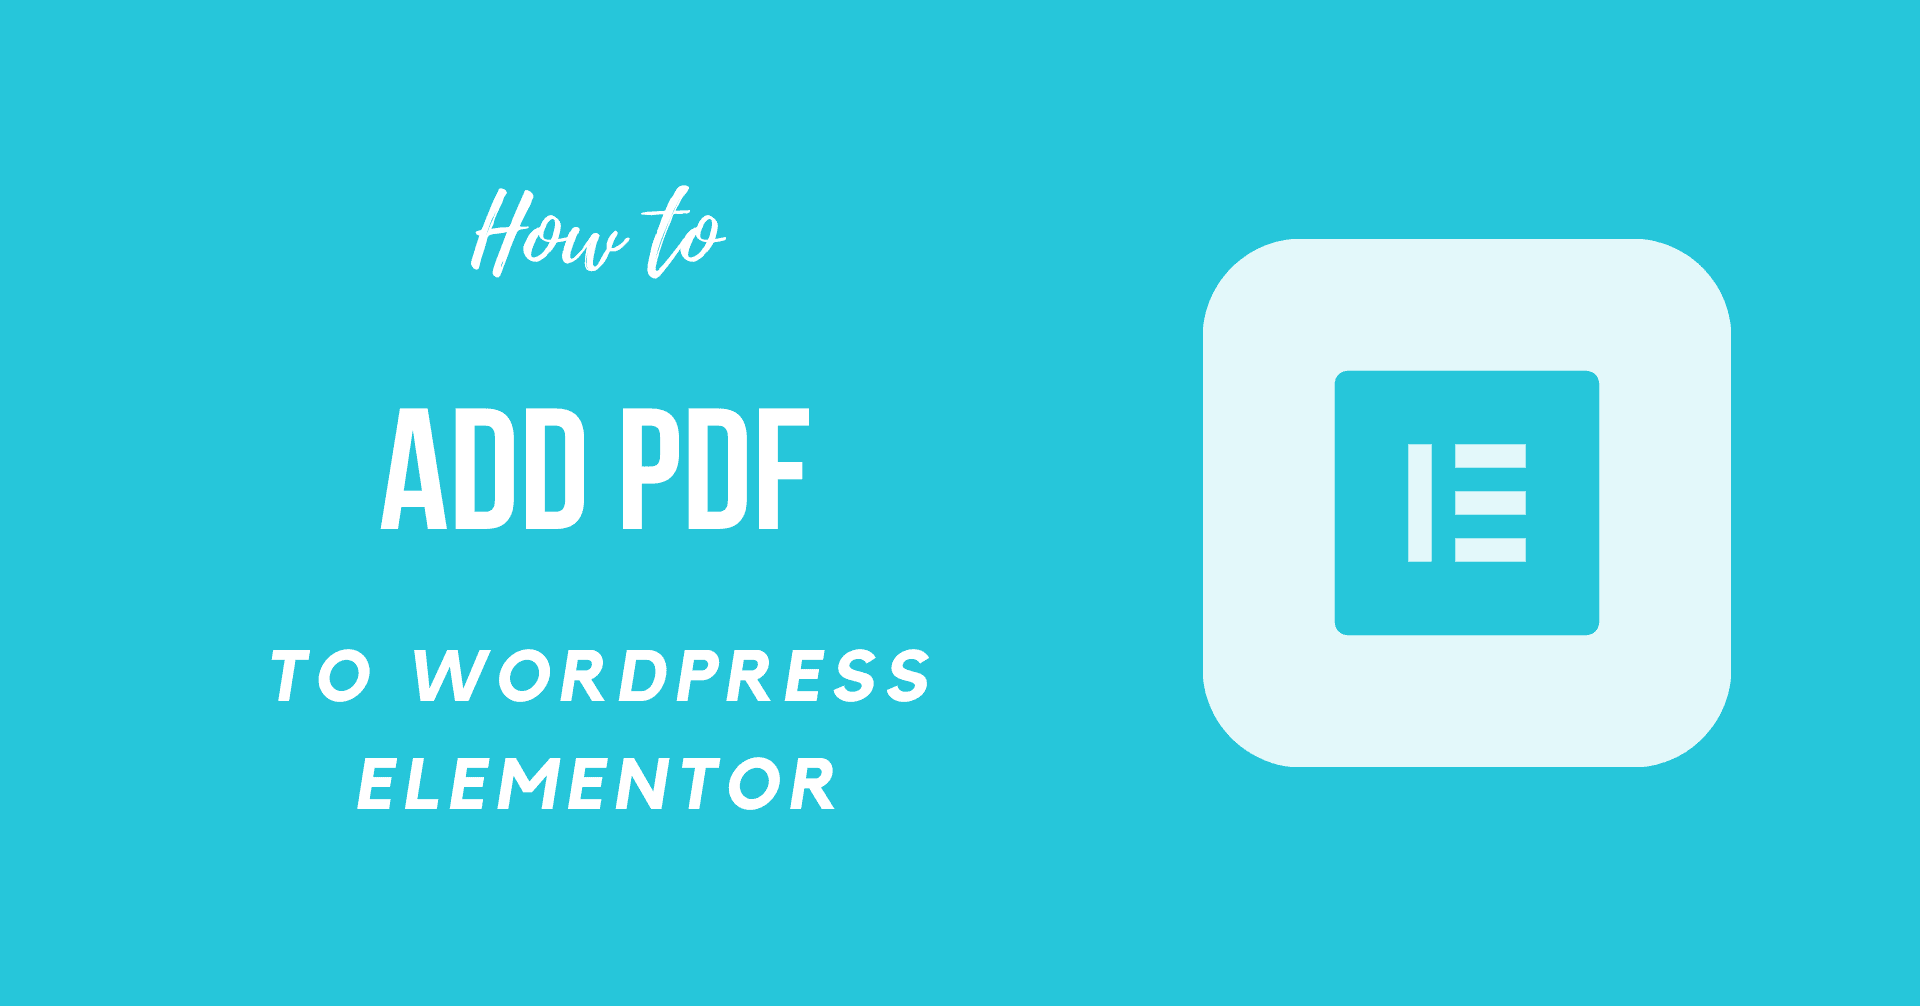 How to Add PDF to WordPress Elementor